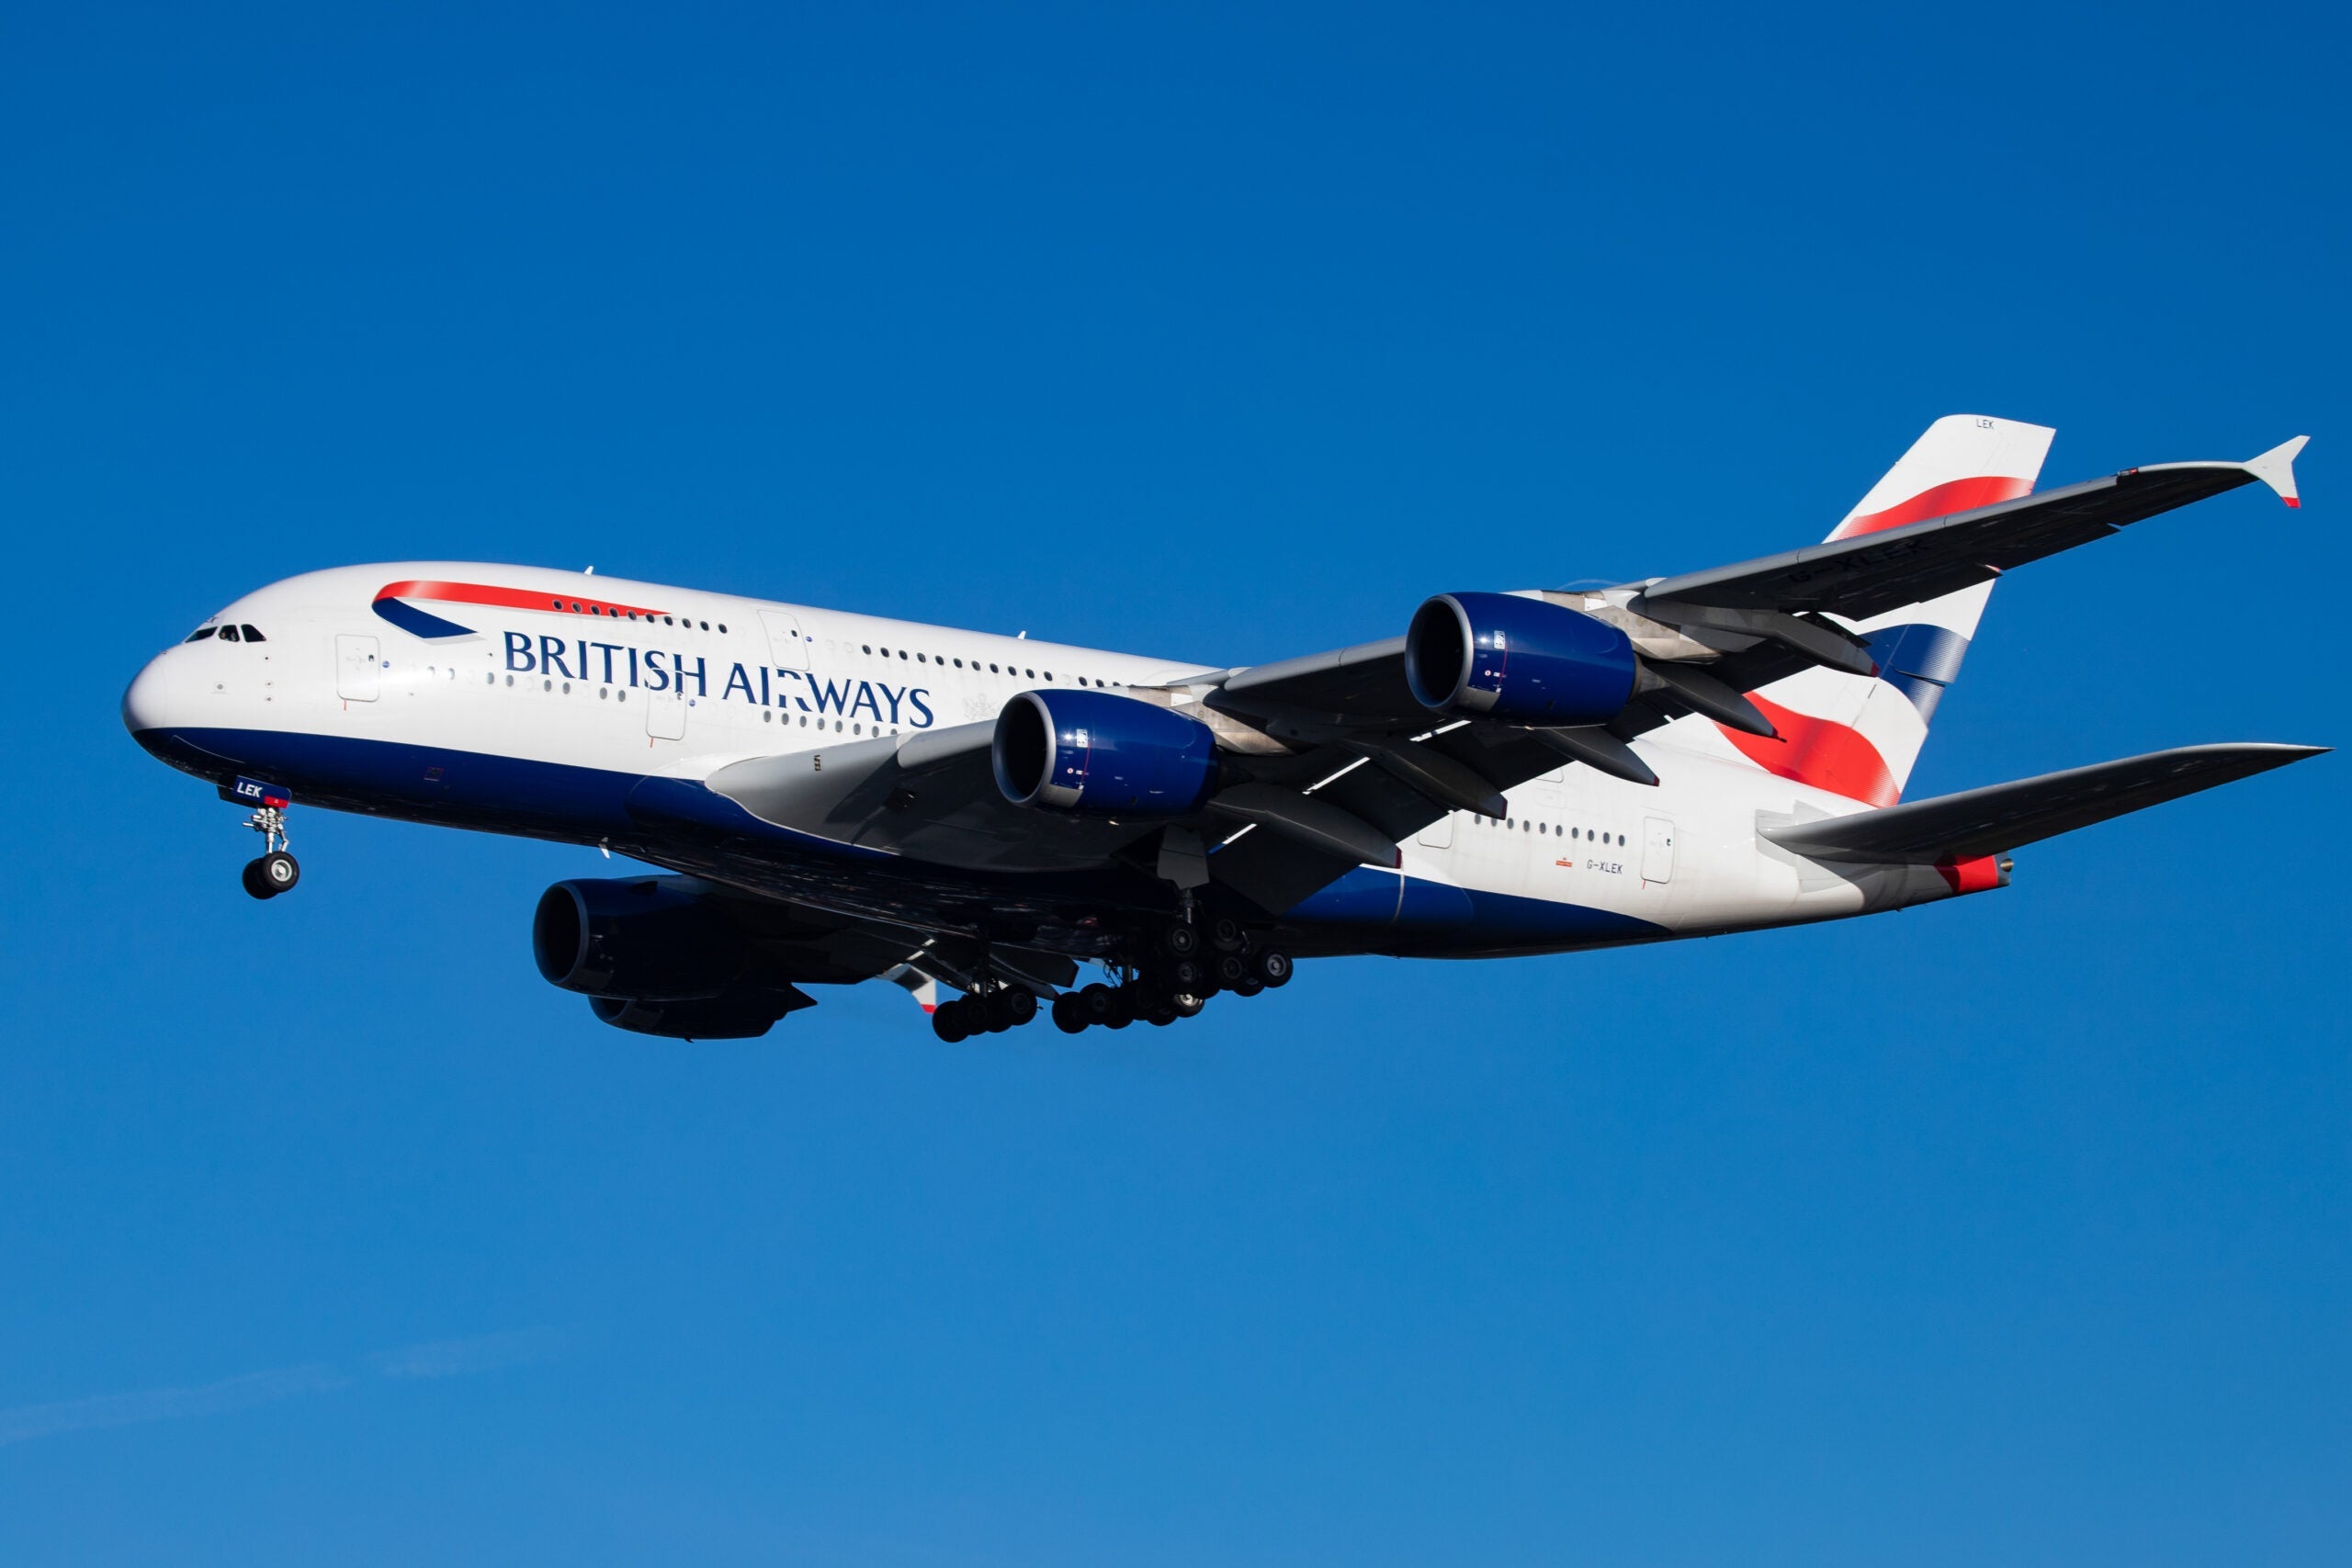 British Airways Airbus A380-800 aircraft with registration G-XLEK landing at London Heathrow International Airport